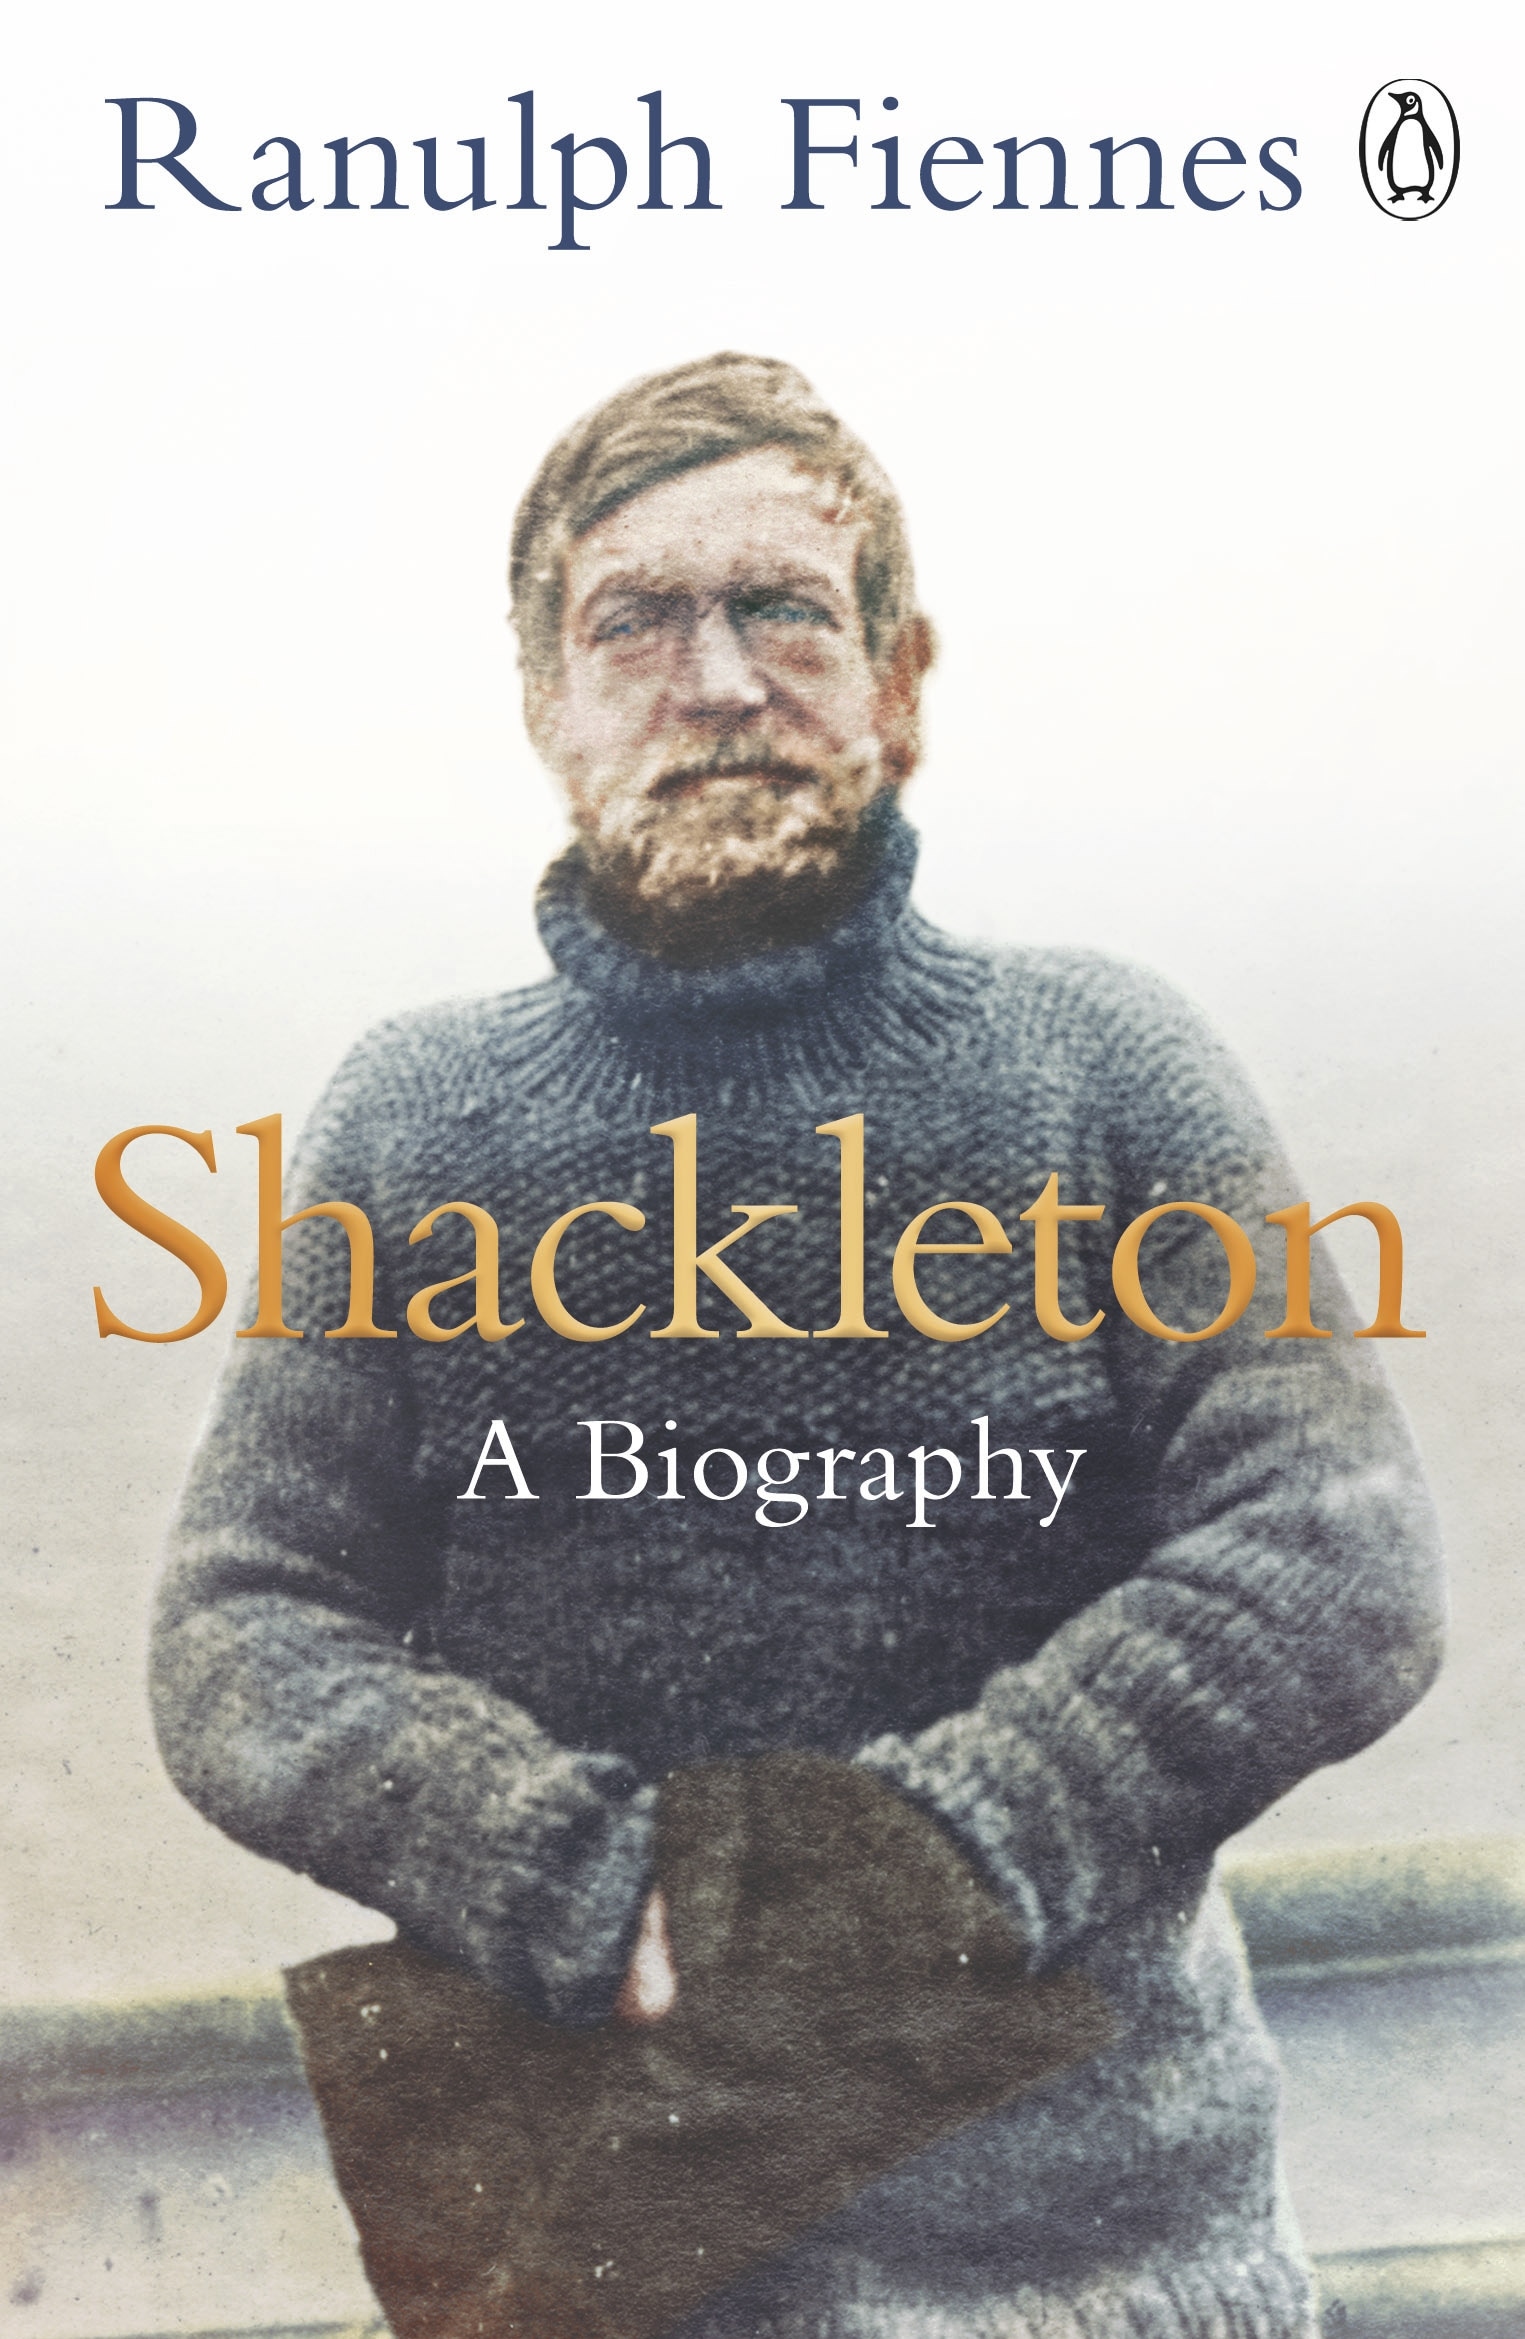 Book “Shackleton” by Ranulph Fiennes — June 9, 2022